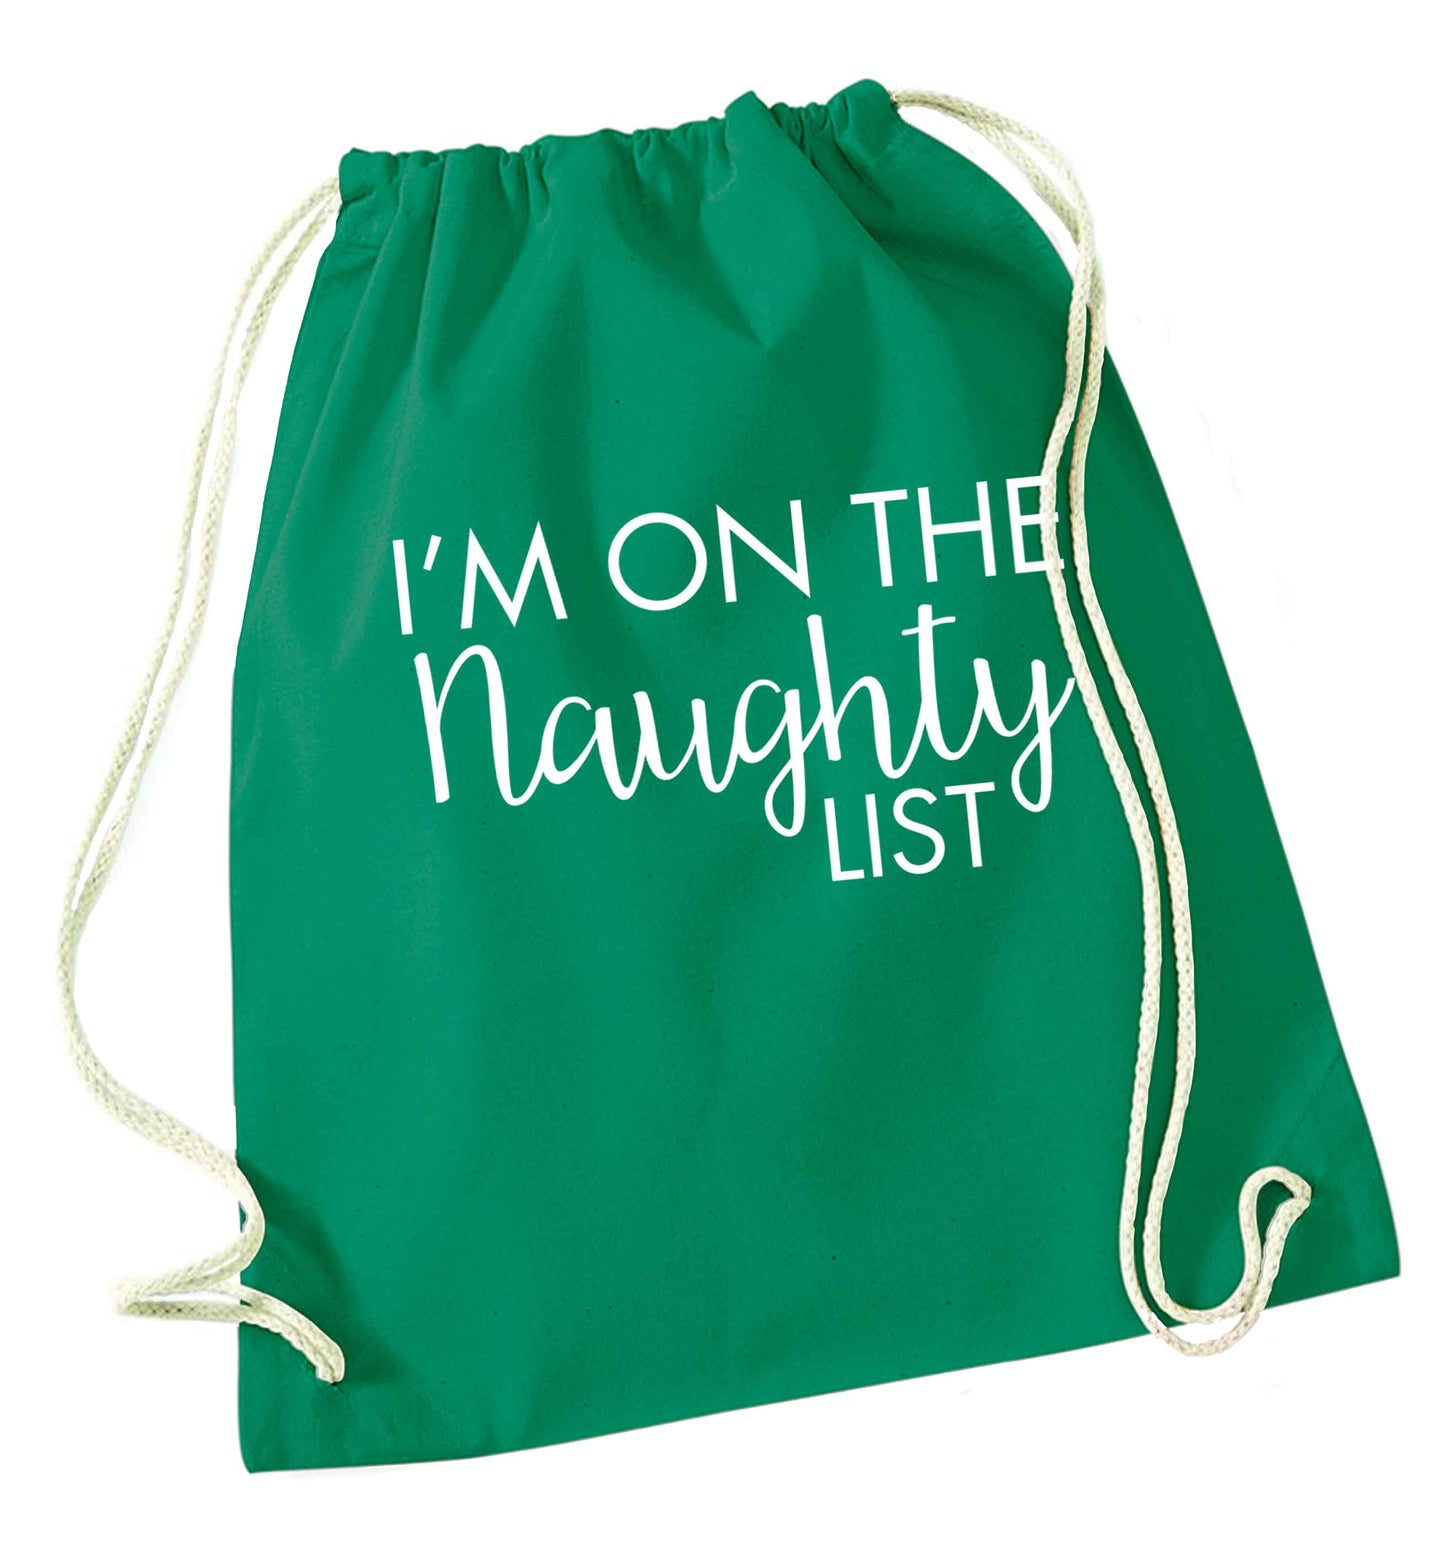 I'm on the naughty list green drawstring bag